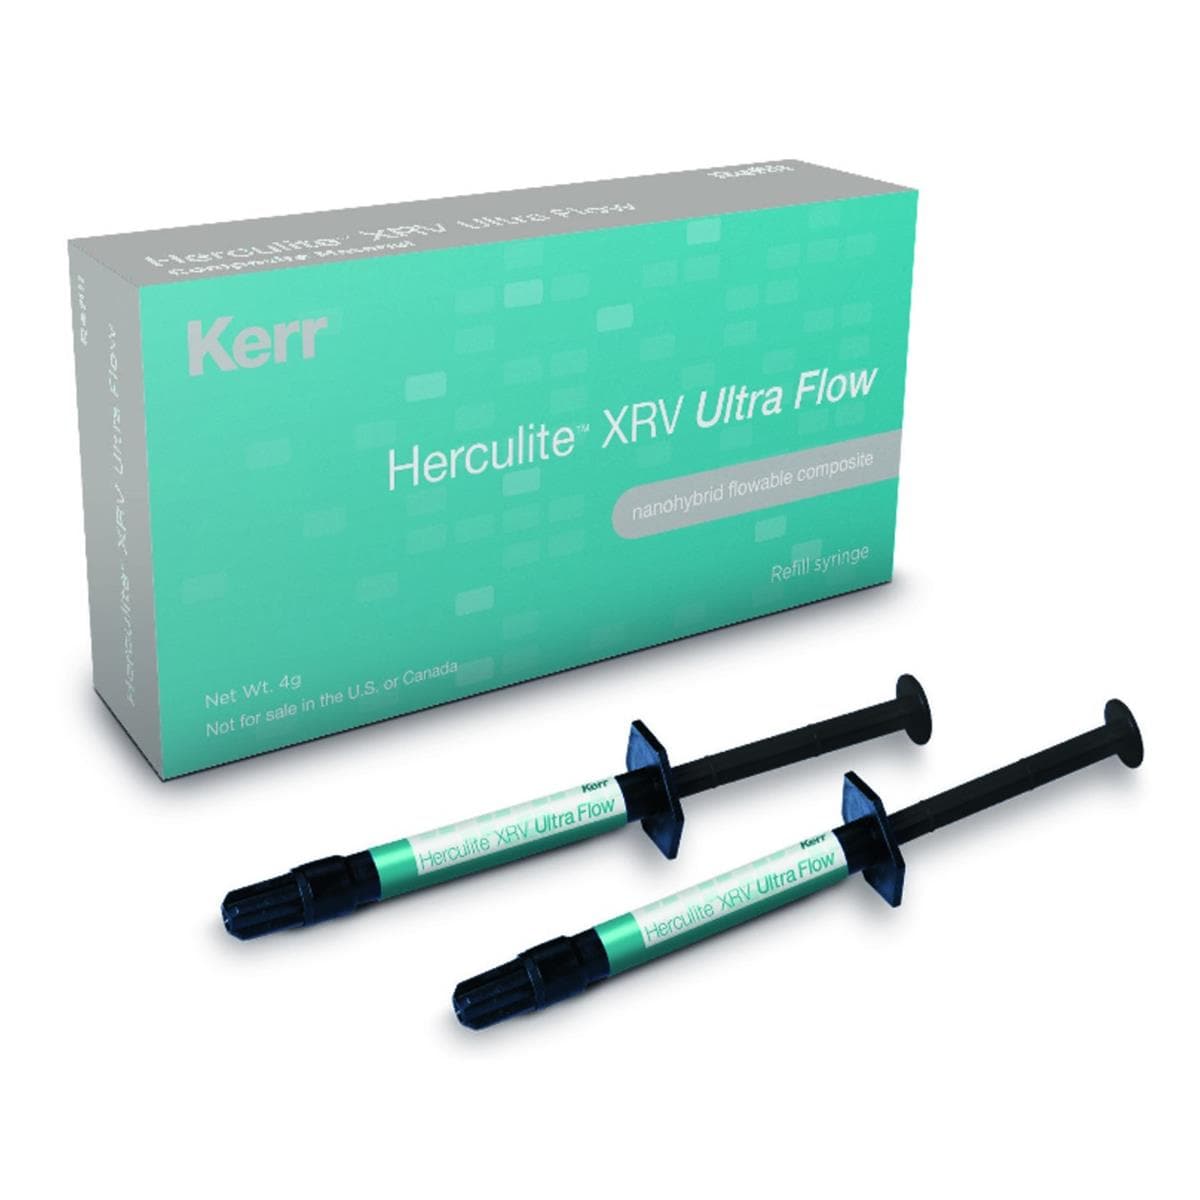 Herculite XRV Ultra Flow KERR - D2 - Seringue de 2g - Bote de 2